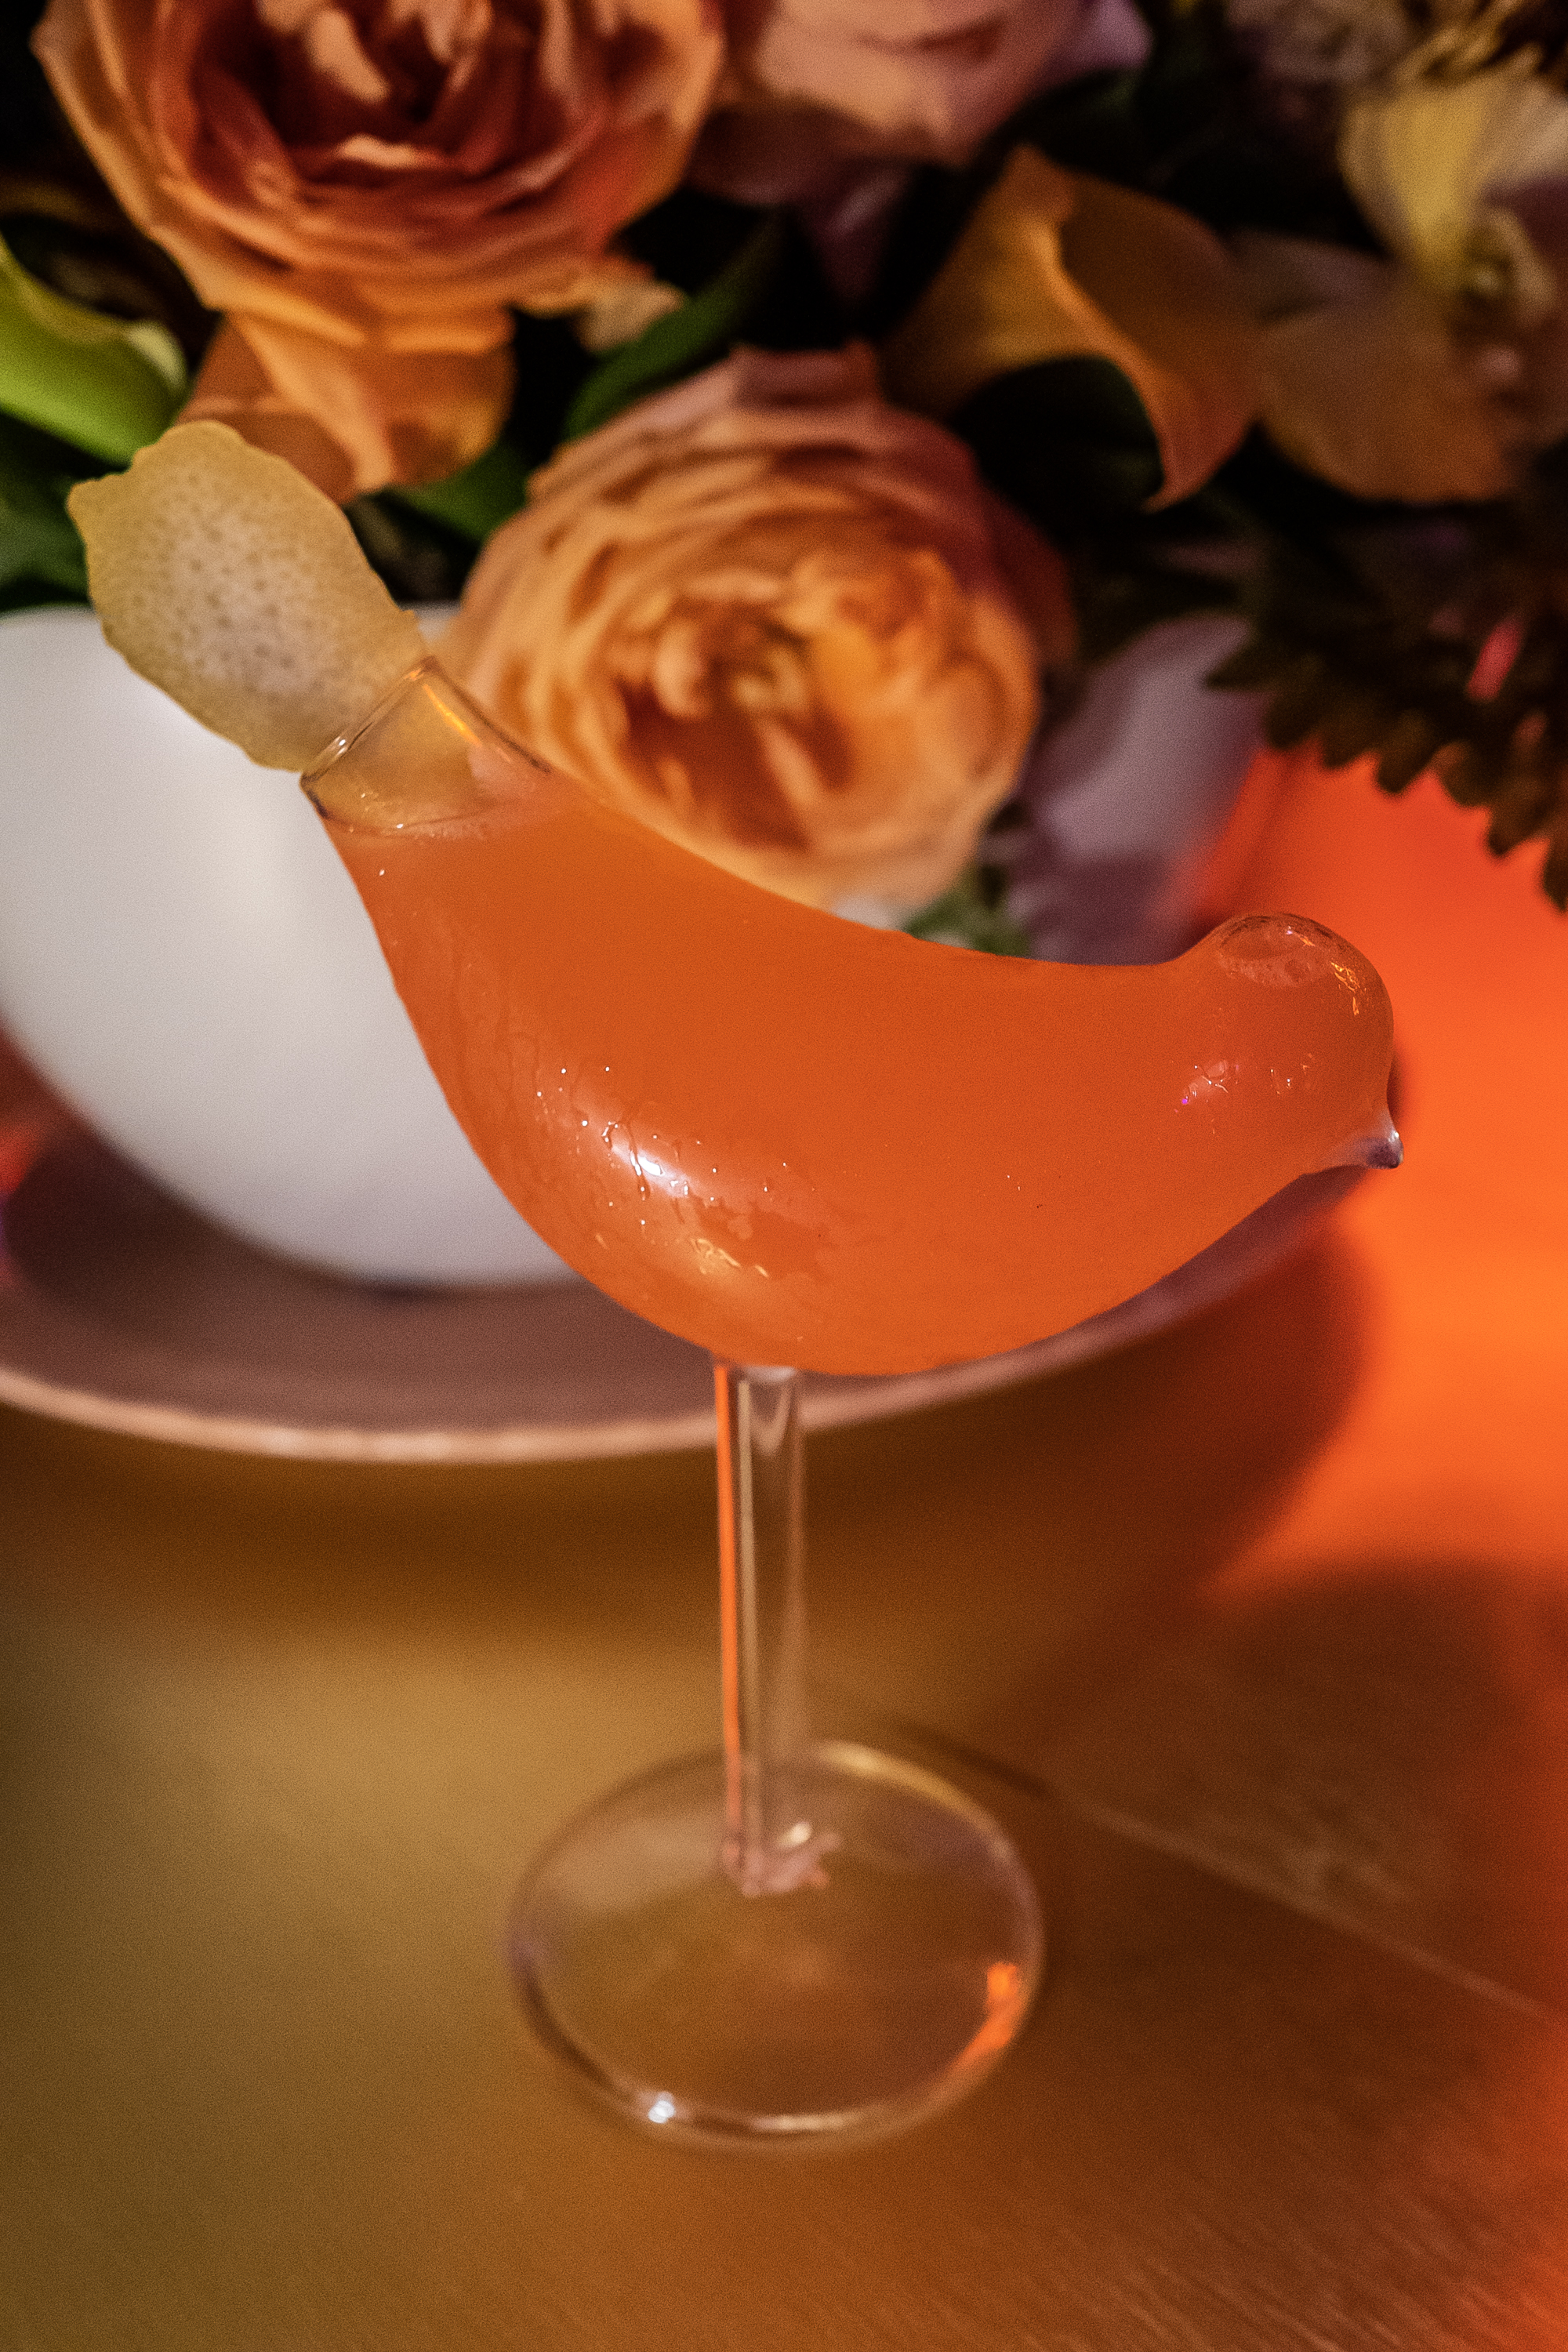 A bird-shaped glass with orange liquid.